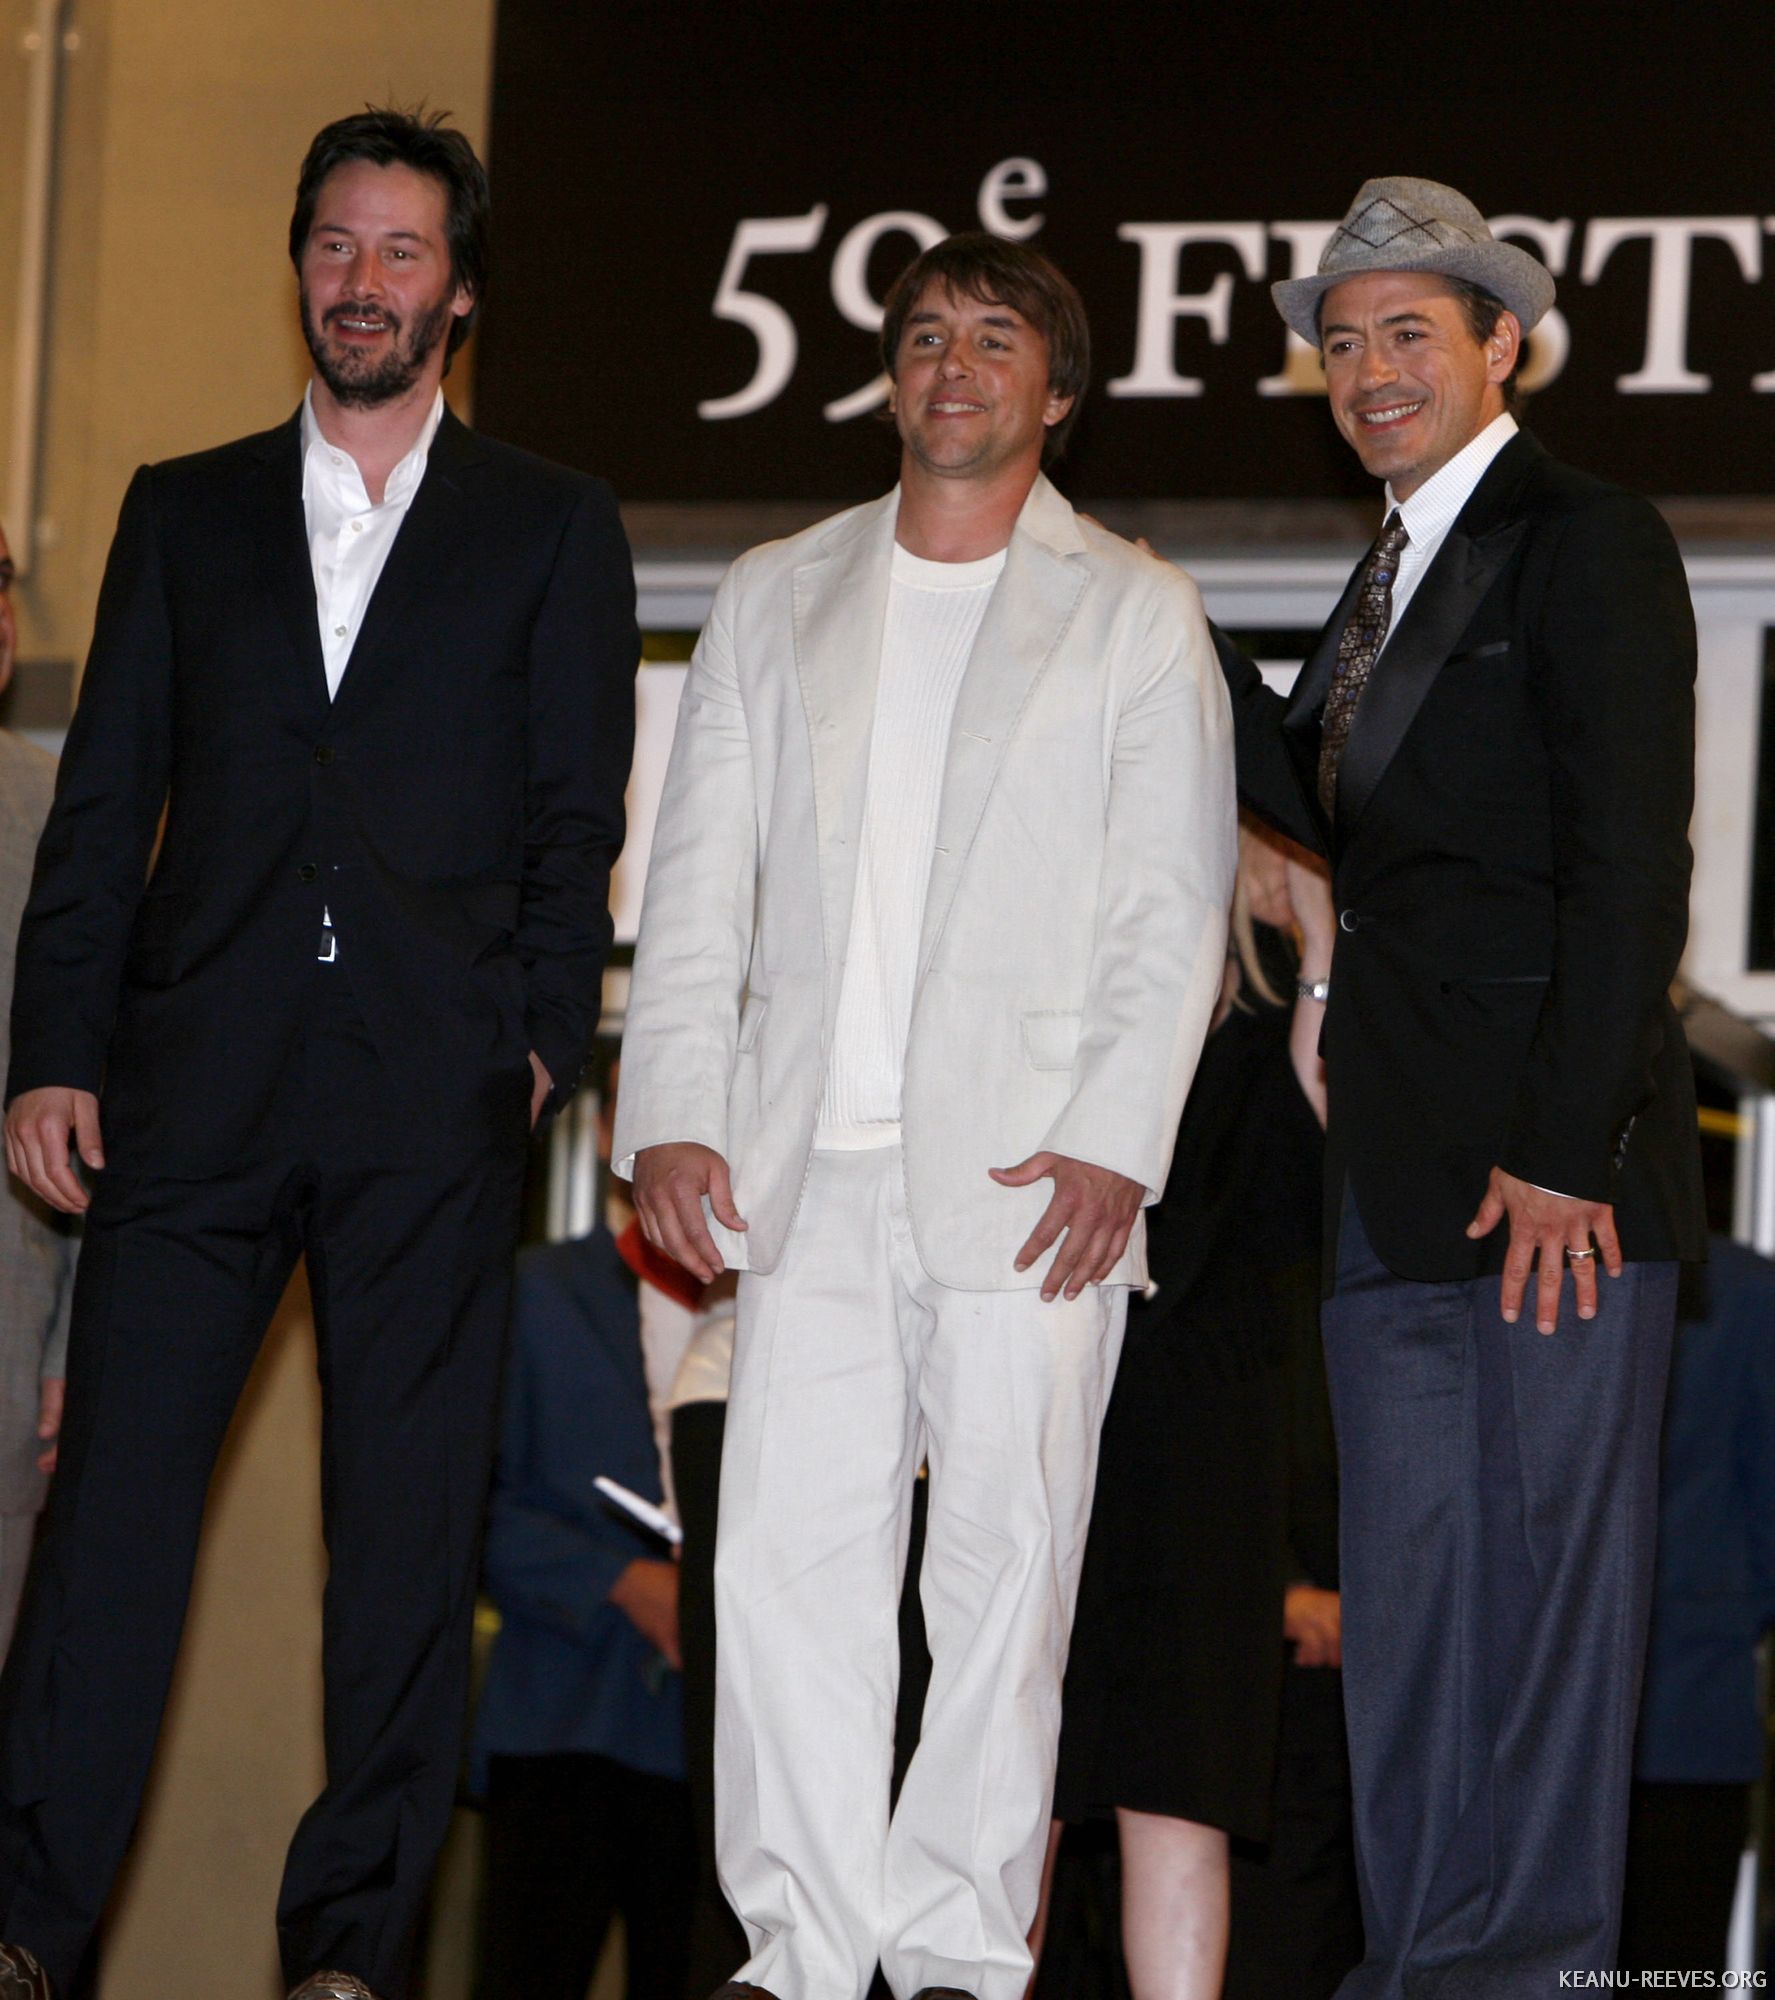 2006-05-25-Cannes-Film-Festival-A-Scanner-Darkly-Premiere-021.jpg